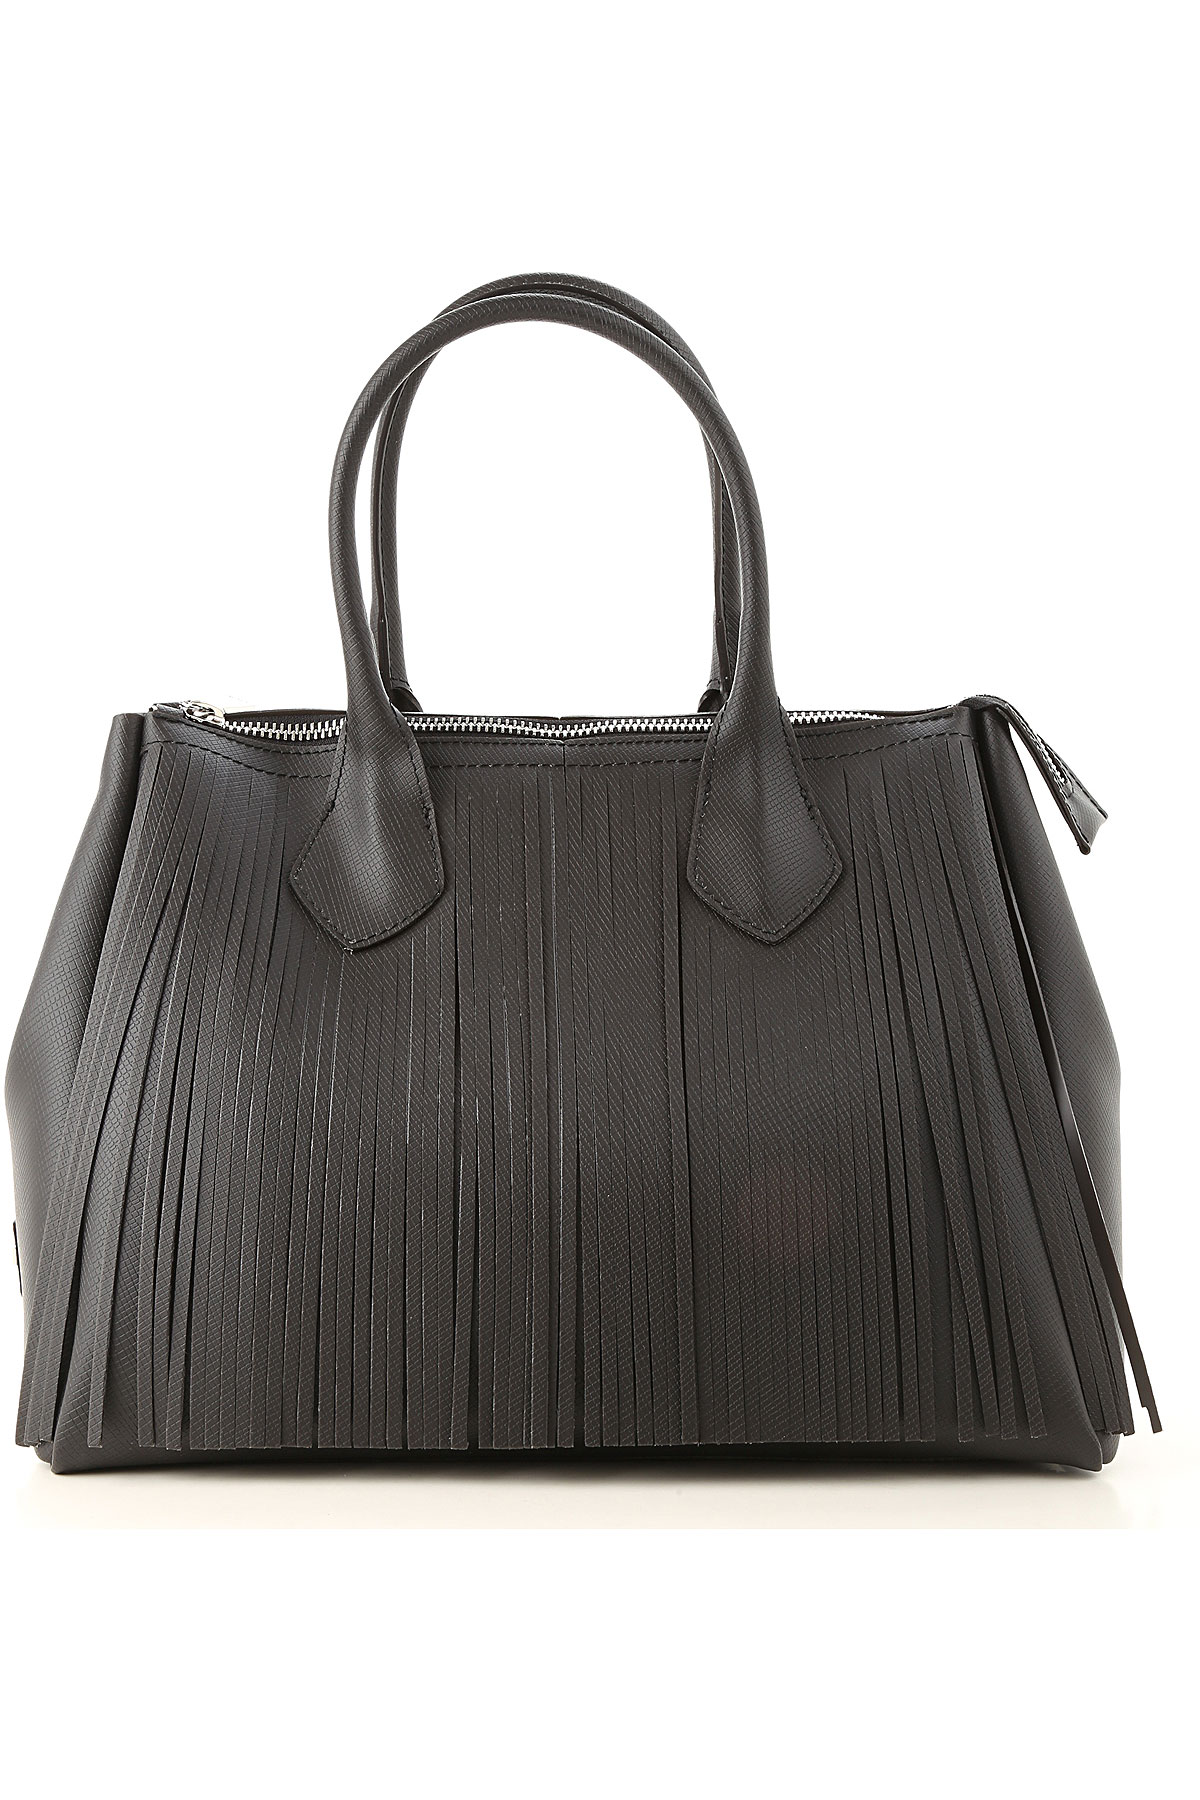 Handbags GUM Gianni Chiarini Design, Style code: 3701-001-